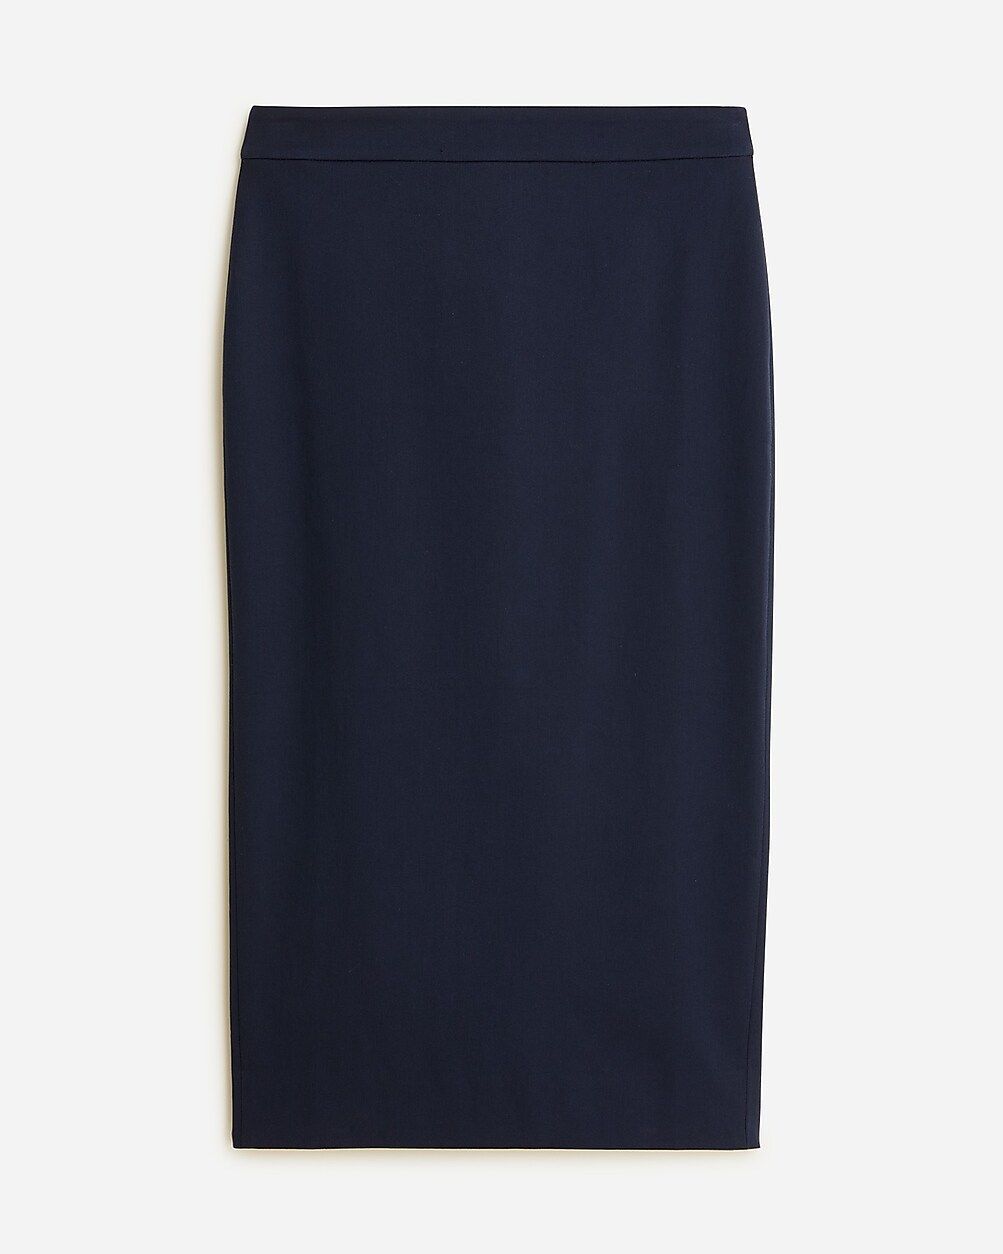 No. 2 Pencil® skirt in bi-stretch cotton blend | J.Crew US